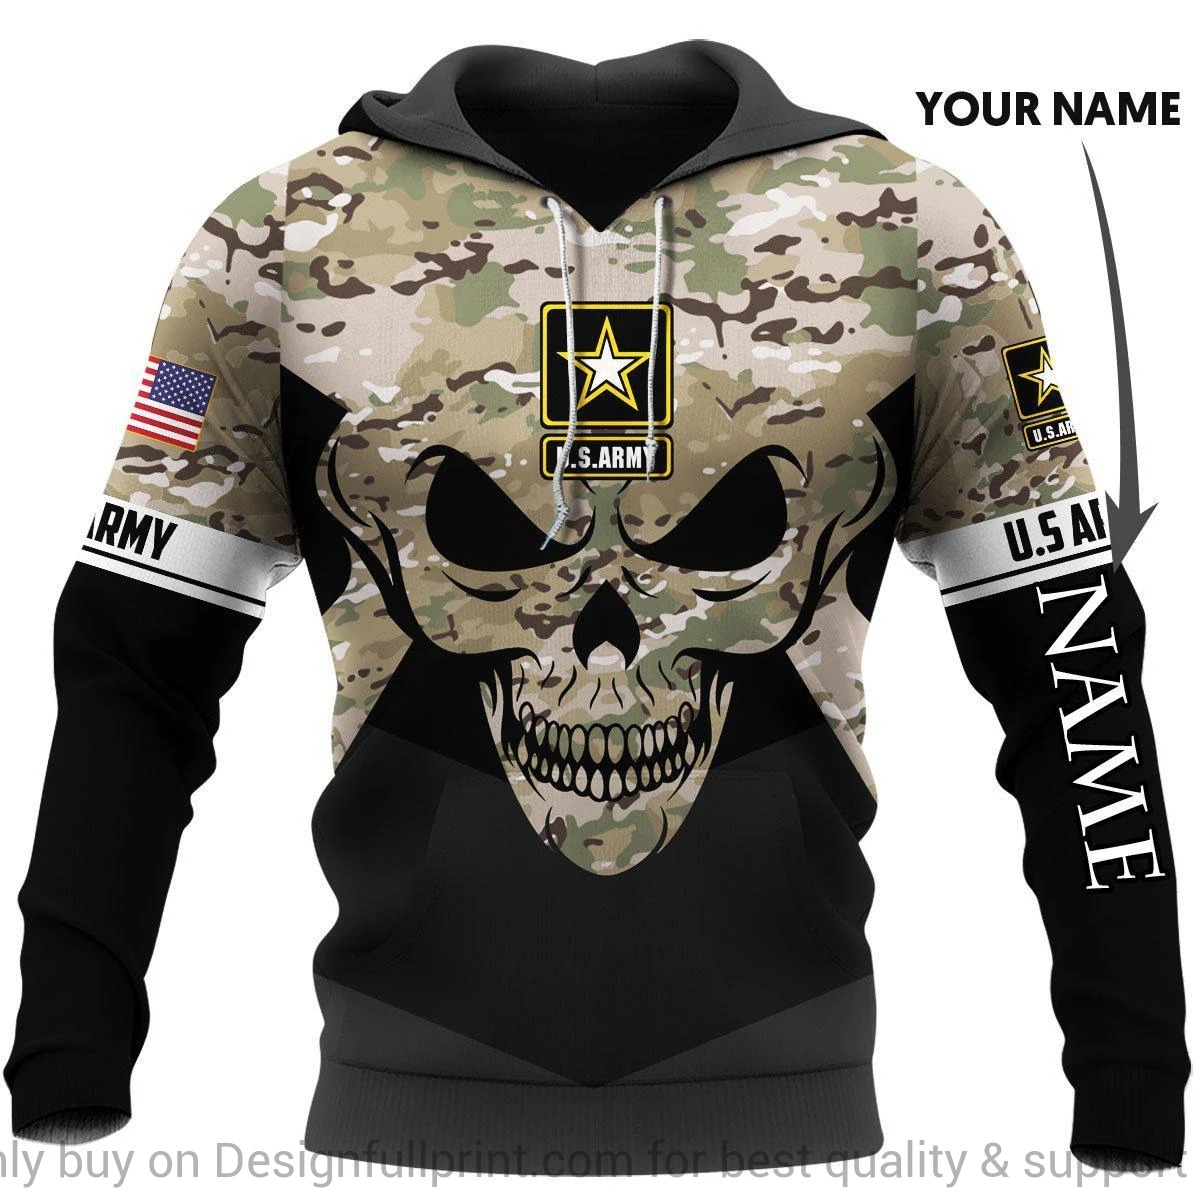 U.S. Army Skull Camo personalized 3D hoodie